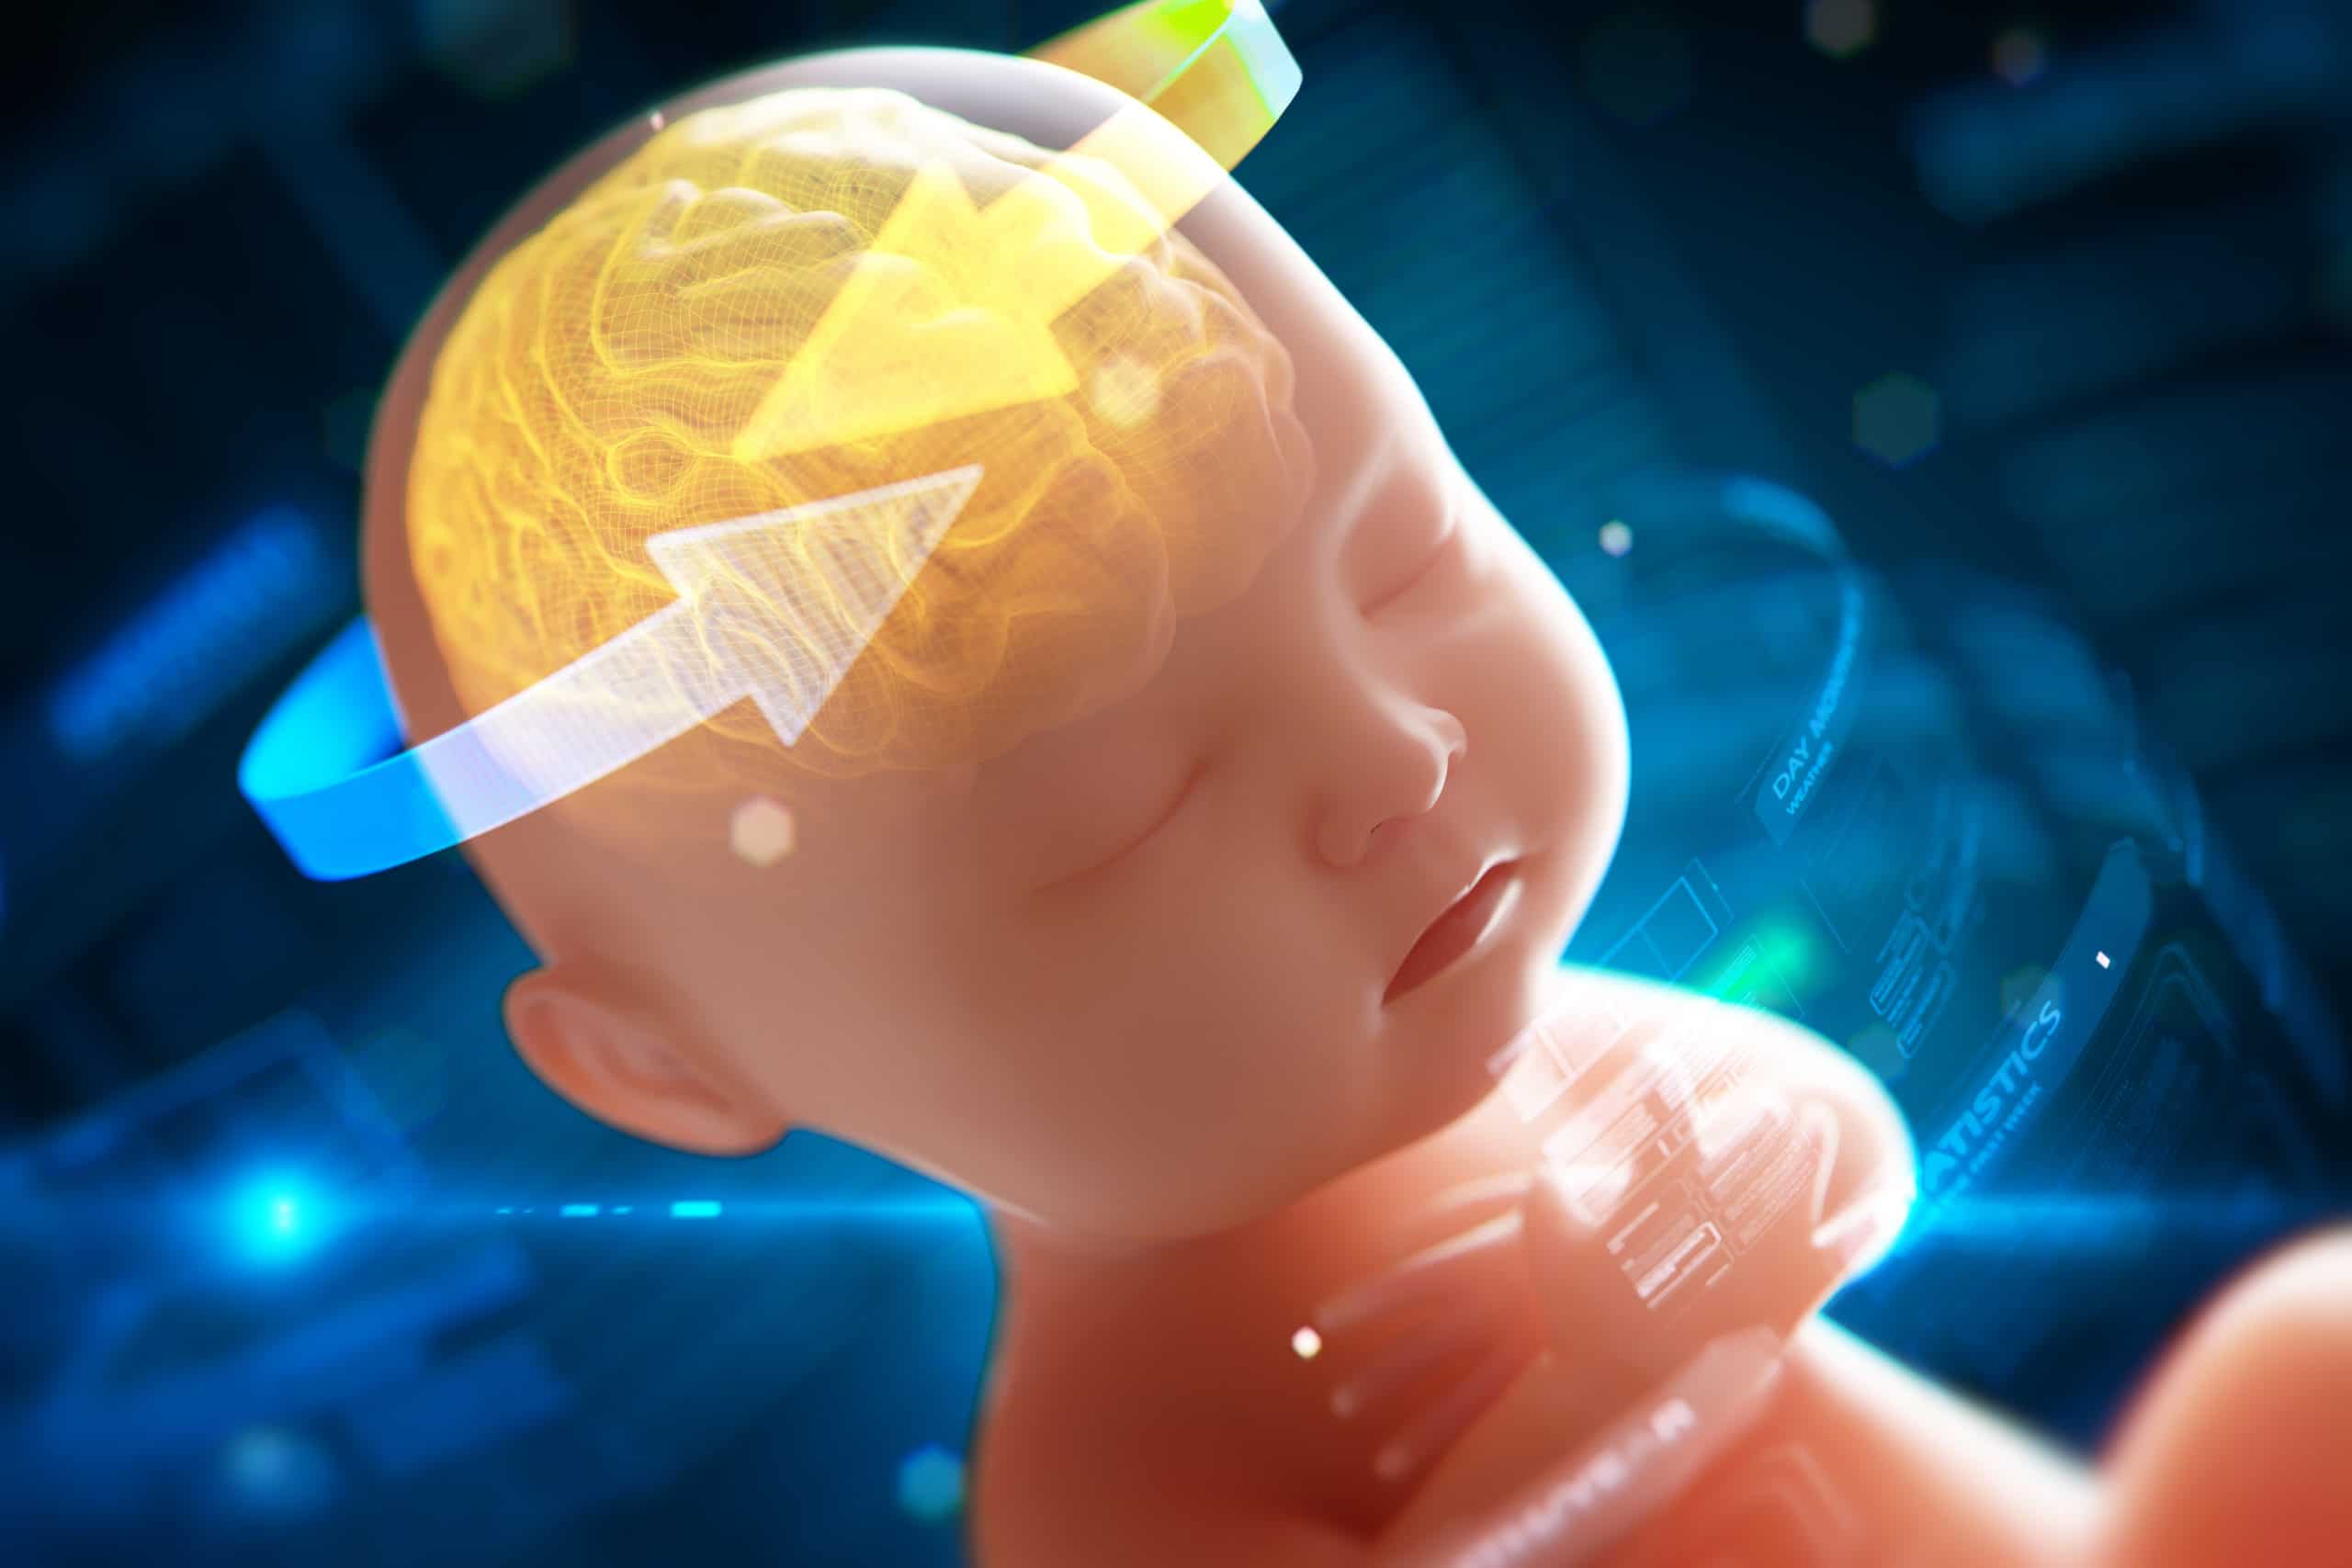 infant brain injury, medical malpractice, birth injury